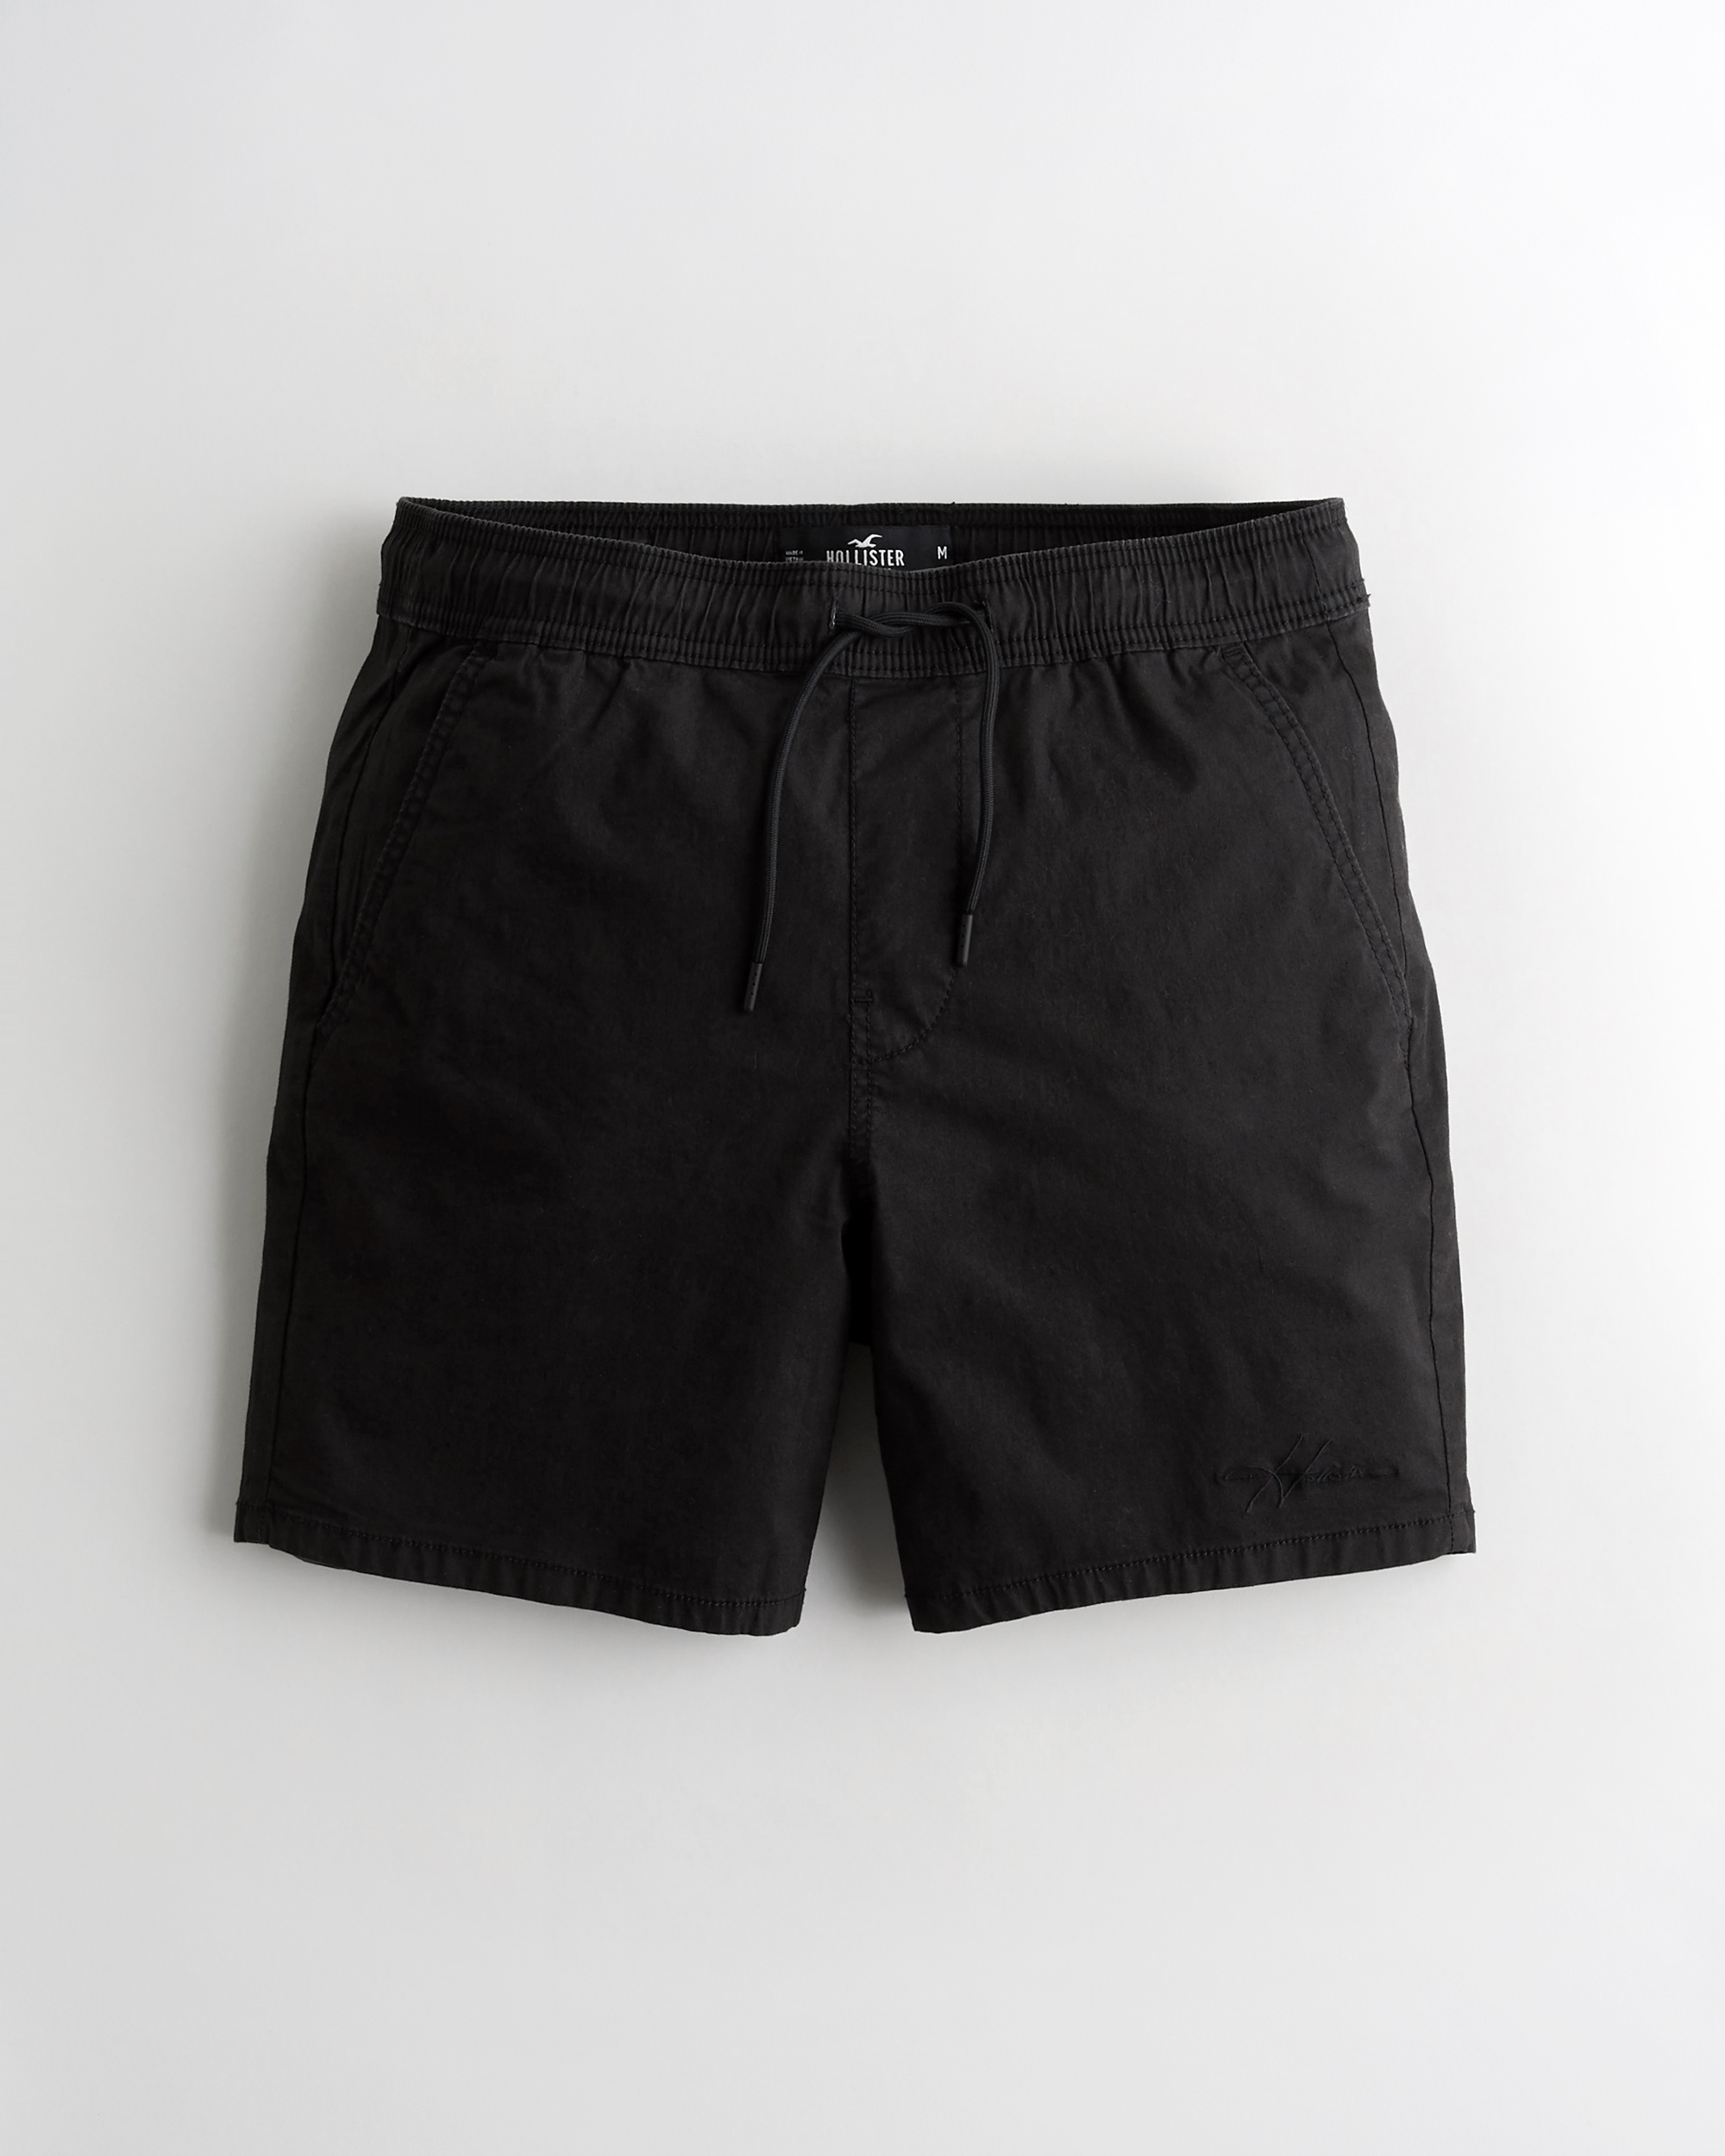 hollister shorts sale